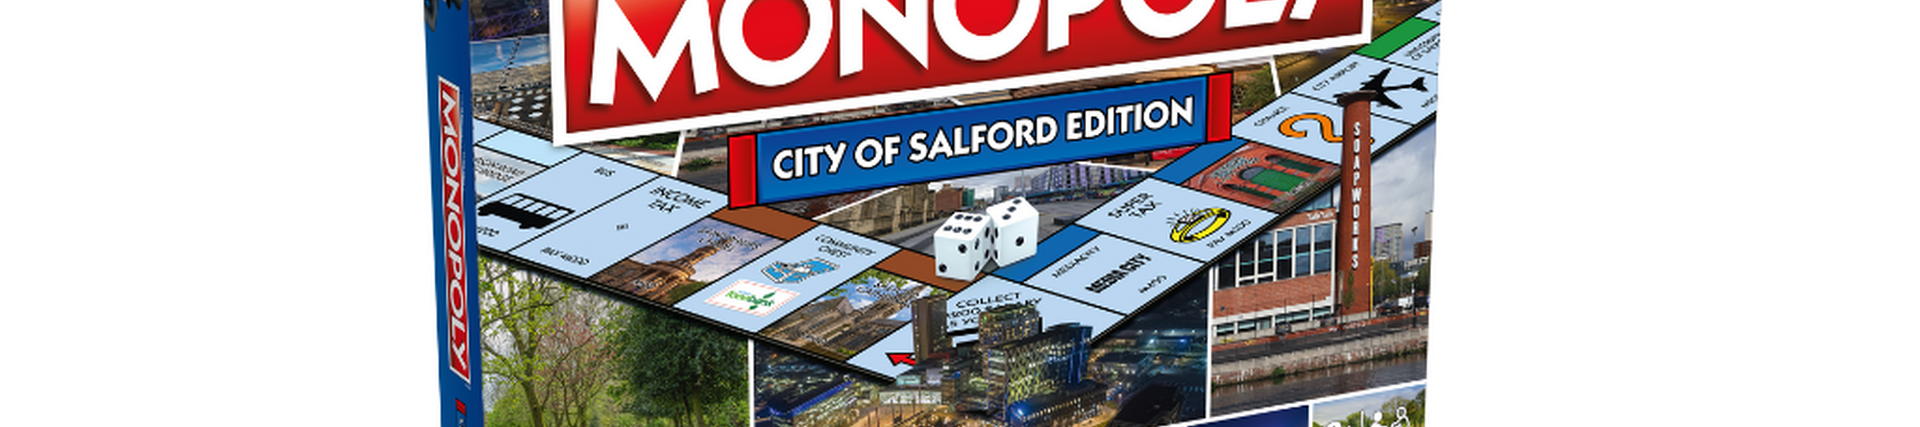 Salford Monopoly box